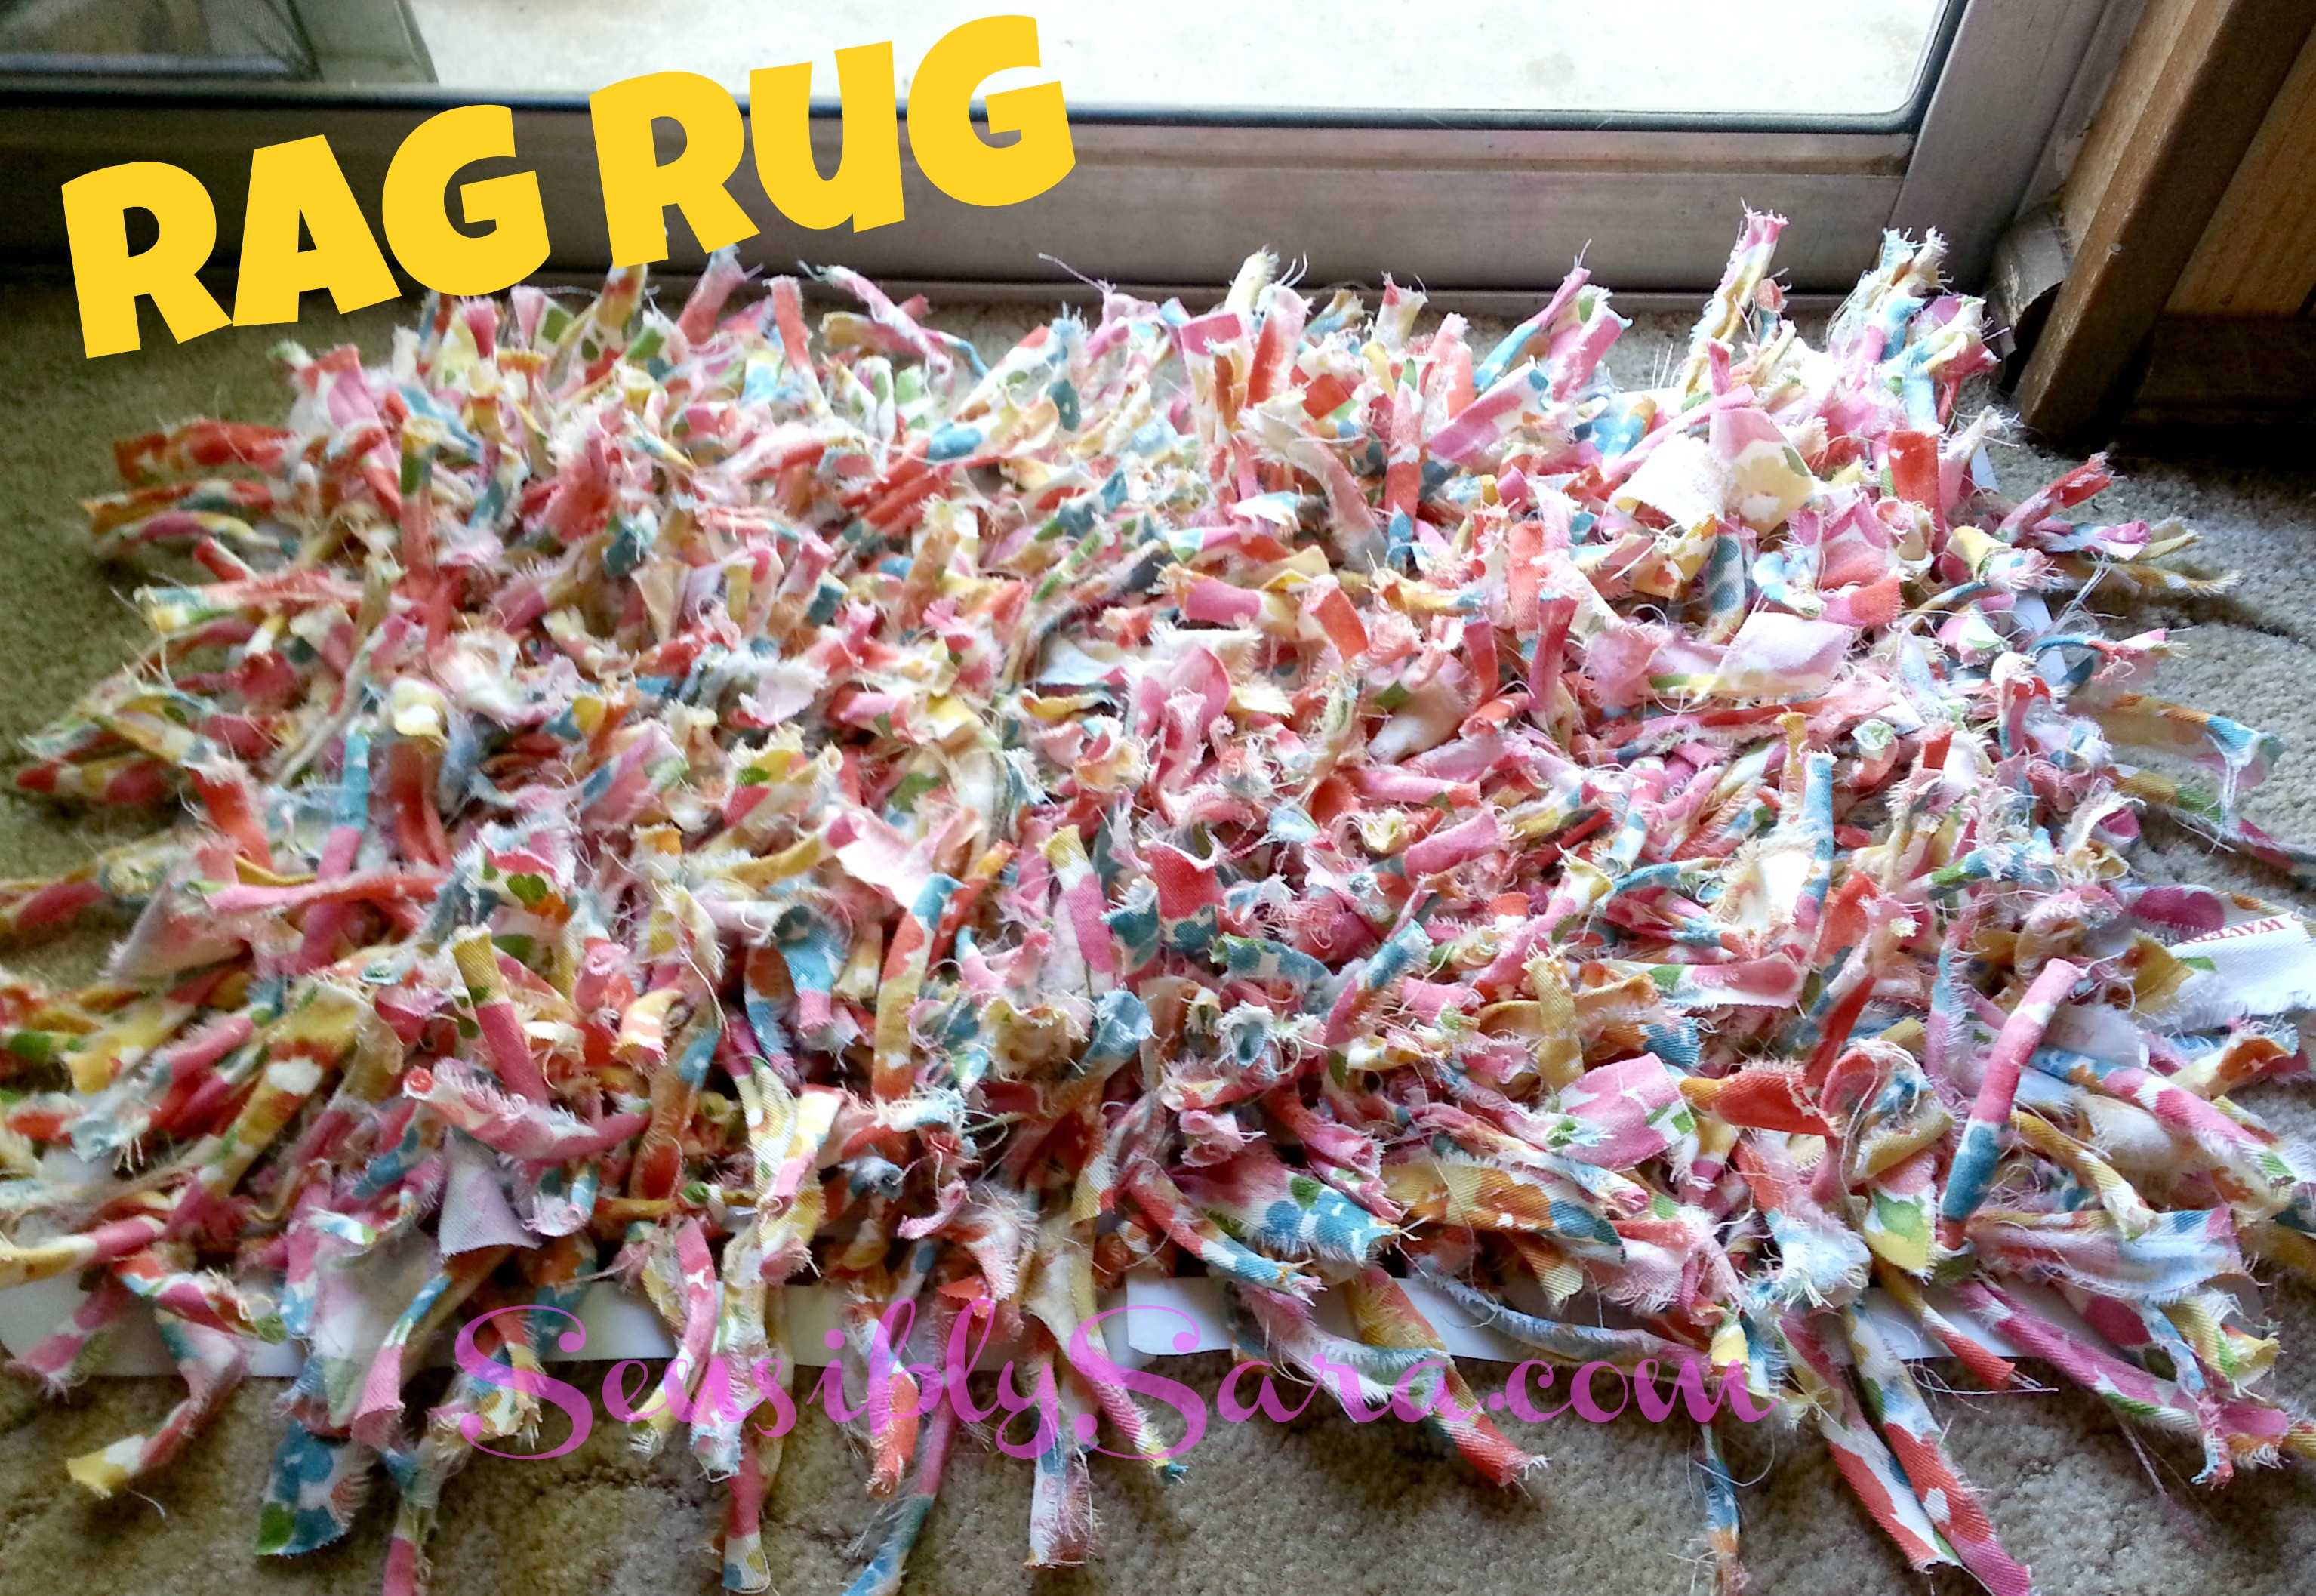 Best ideas about Rag Rug DIY
. Save or Pin Rag Rug DIY Waverize sensiblysara Now.